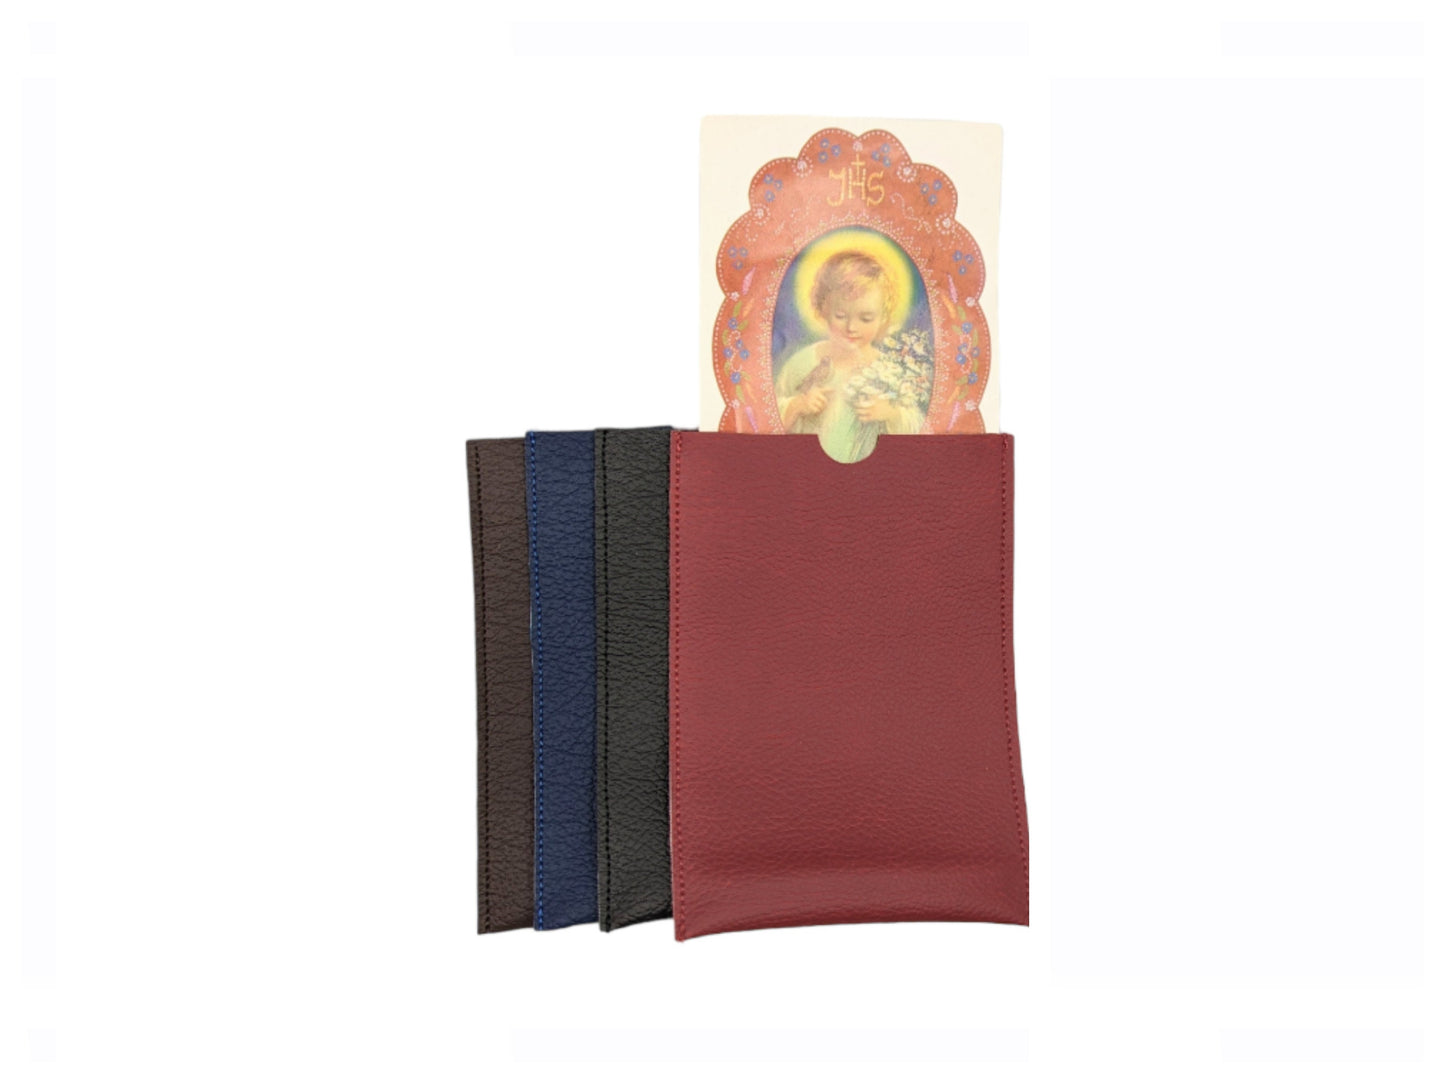 Individual Holy Card Pocket, leatherette, leatherette book case, custom card holder, journal wrap pocket, bible, spiritual reading